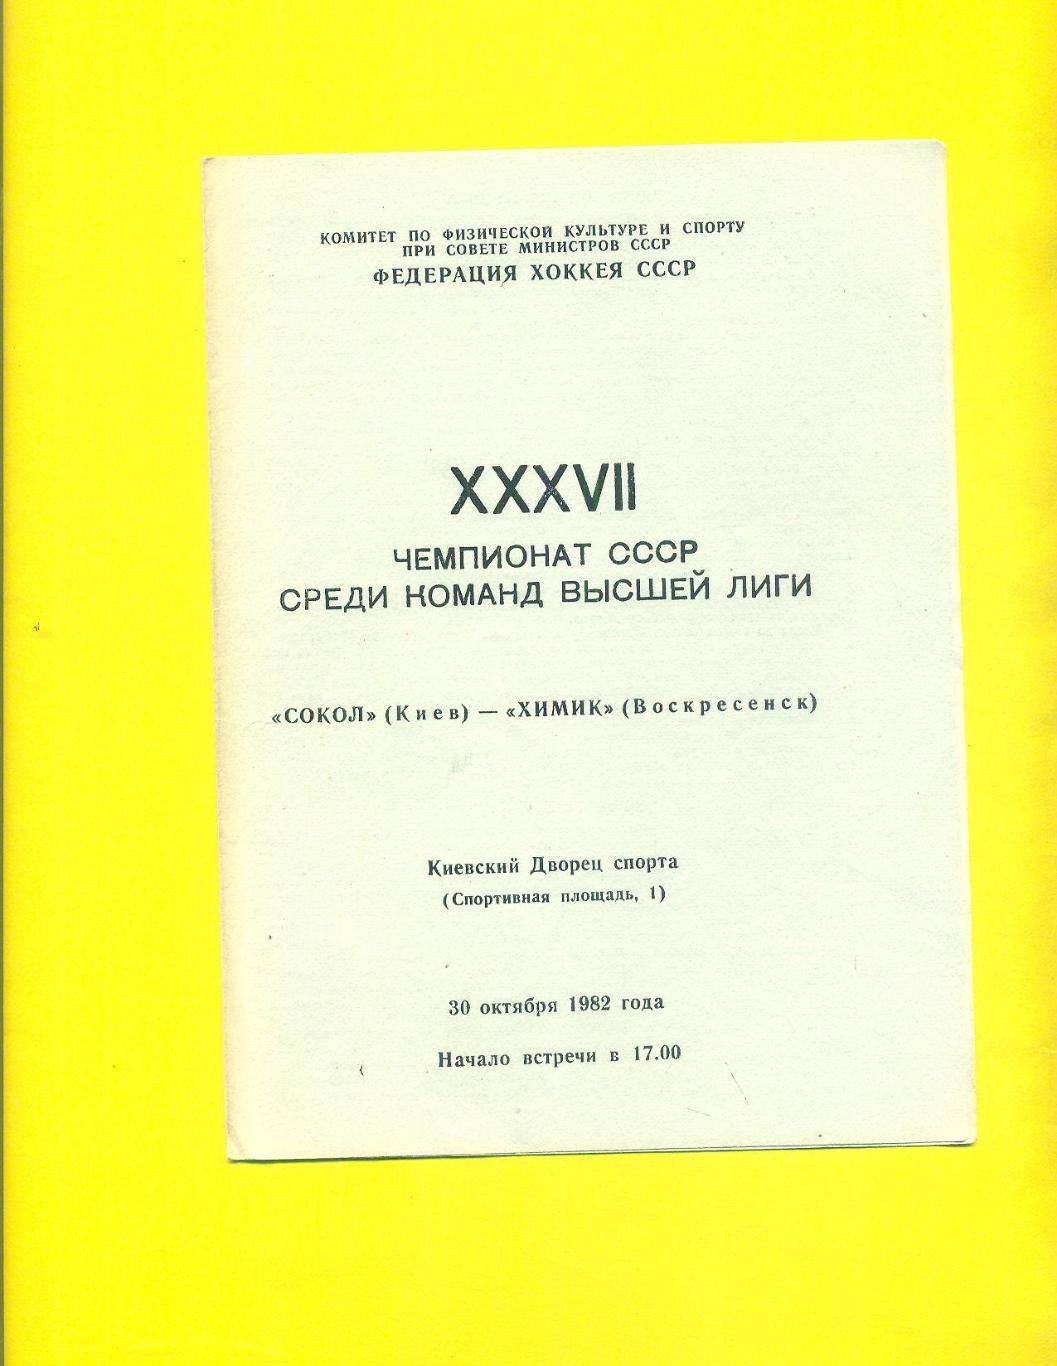 Сокол Киев-Химик-30.10.1982